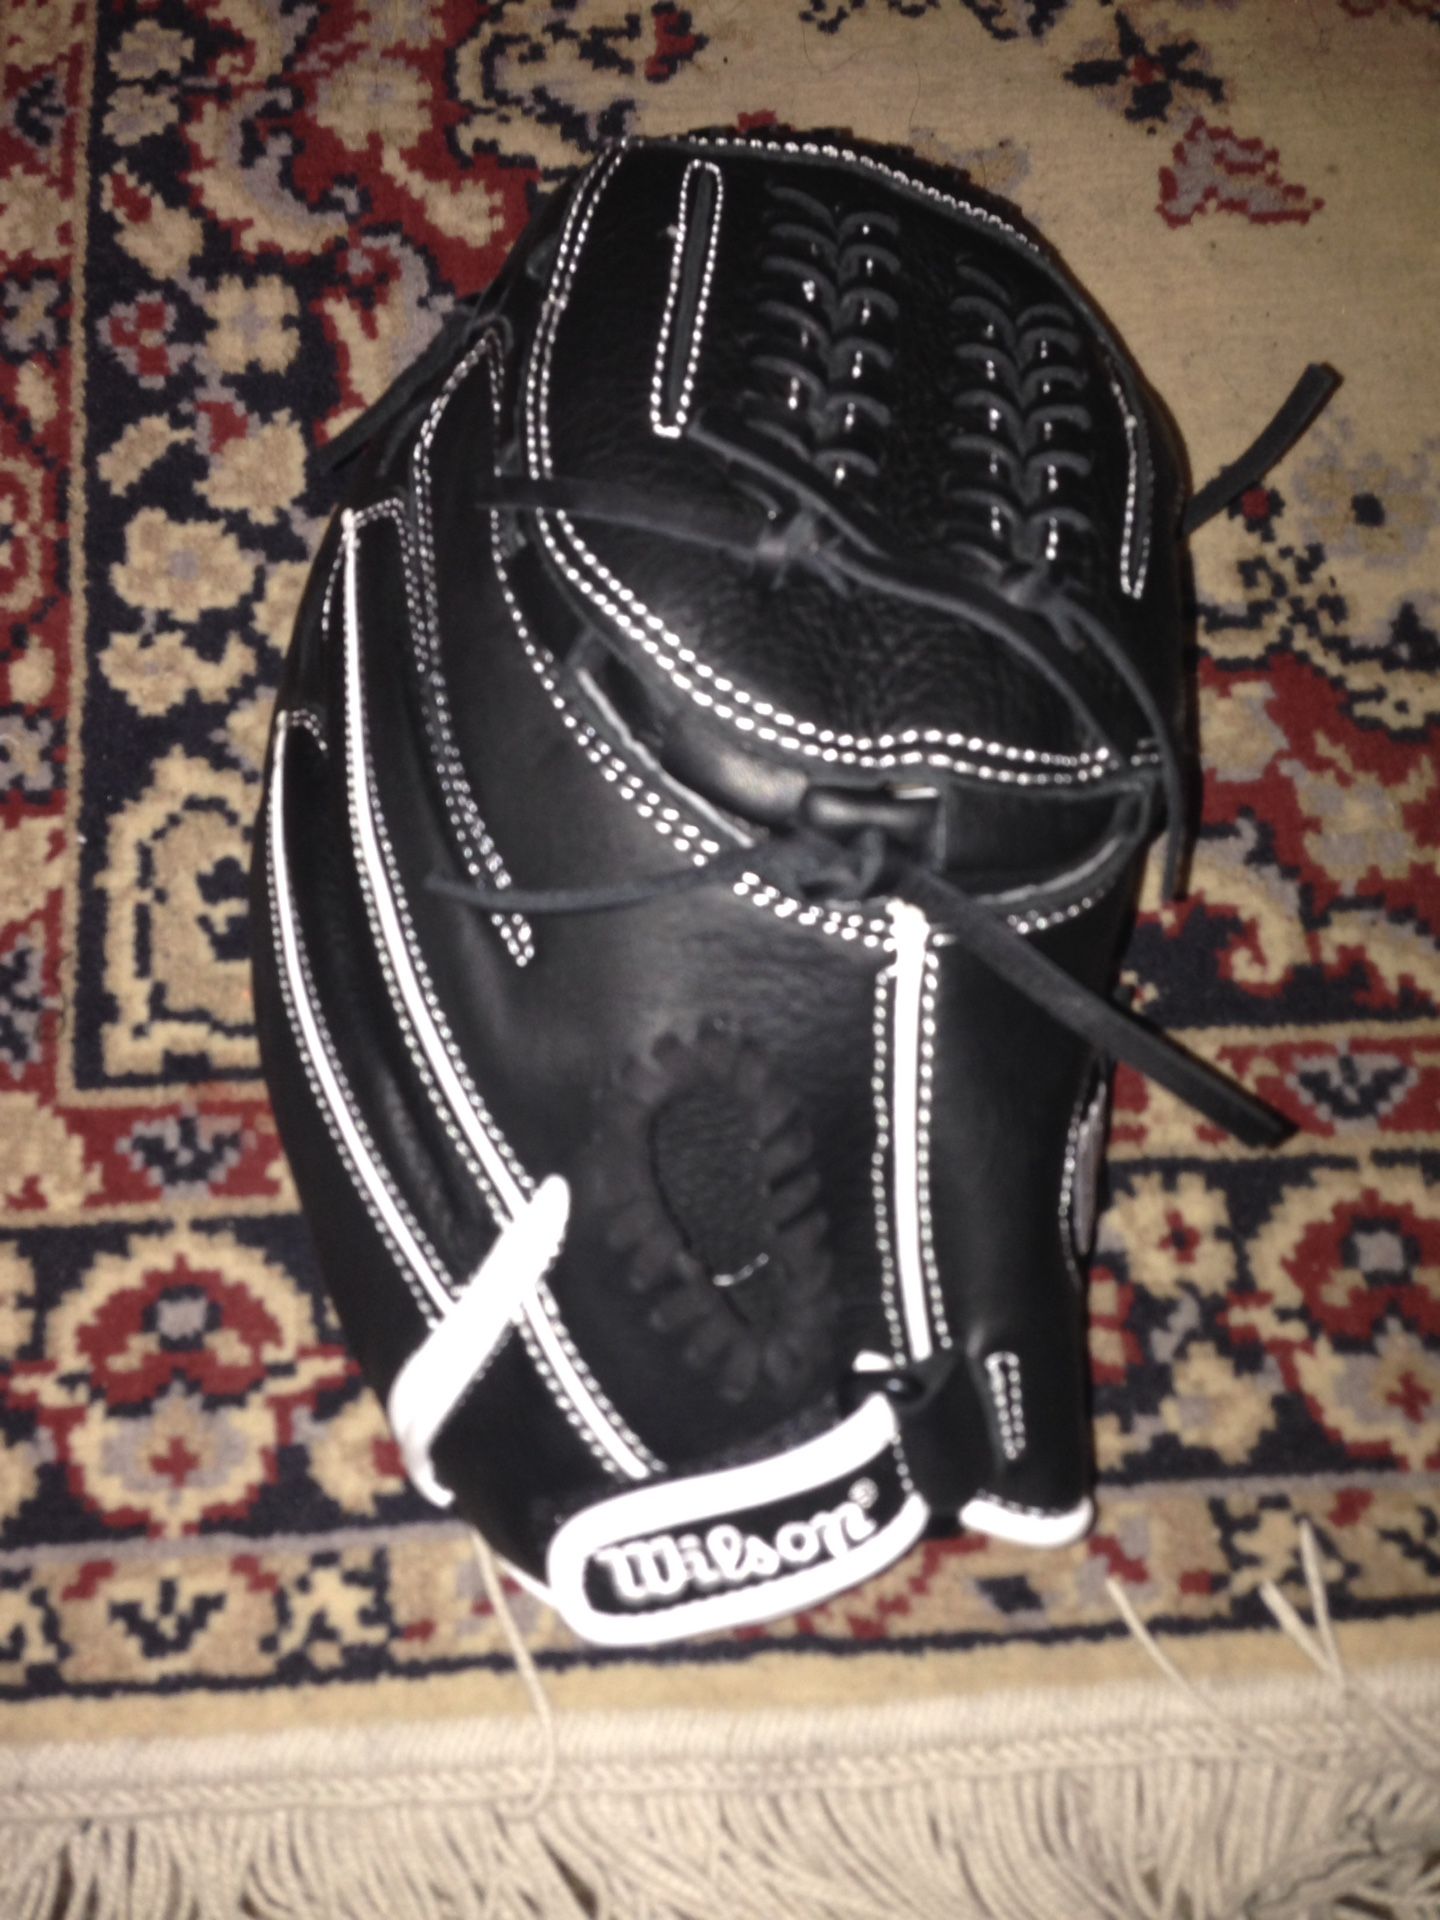 Brand new Wilson baseball glove